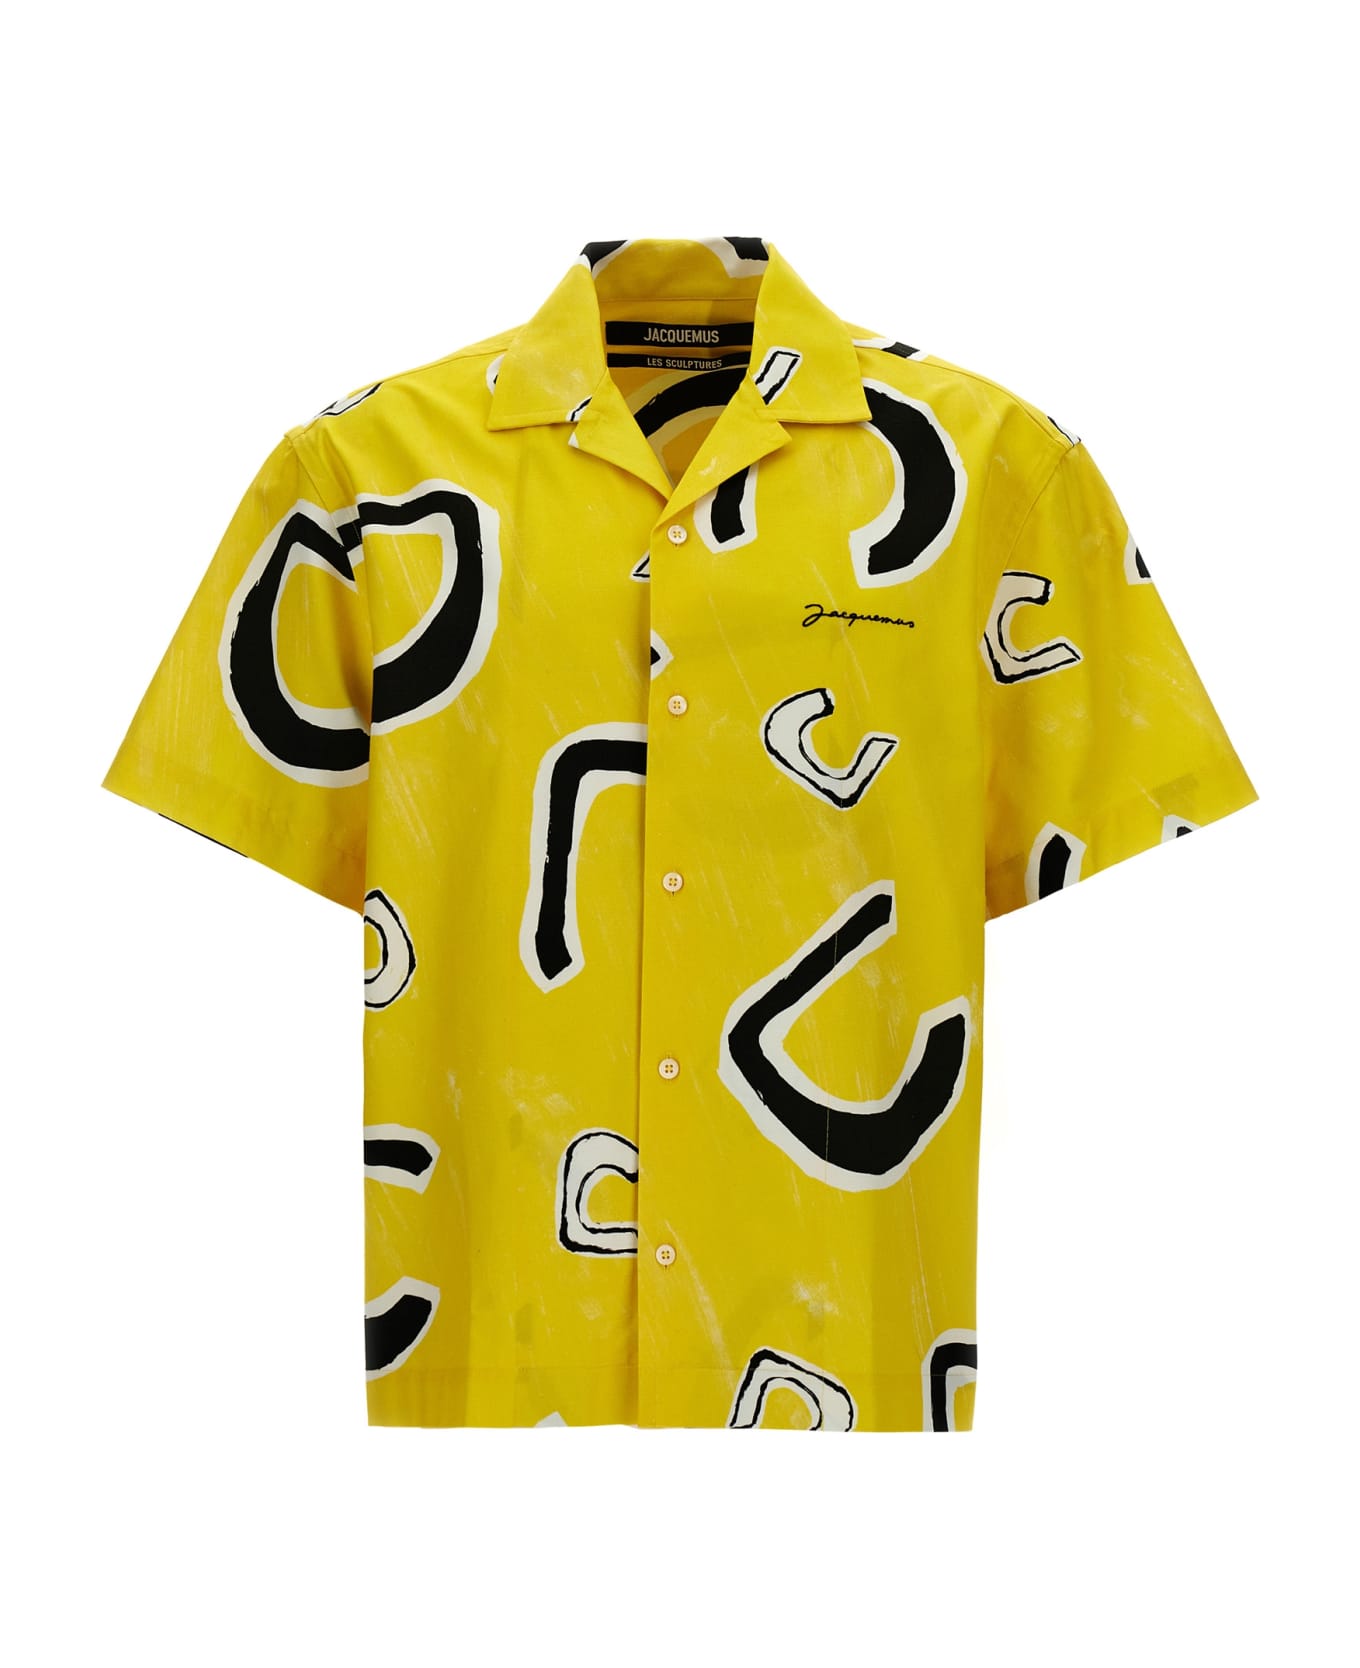 Jacquemus 'jean' Shirt - Yellow